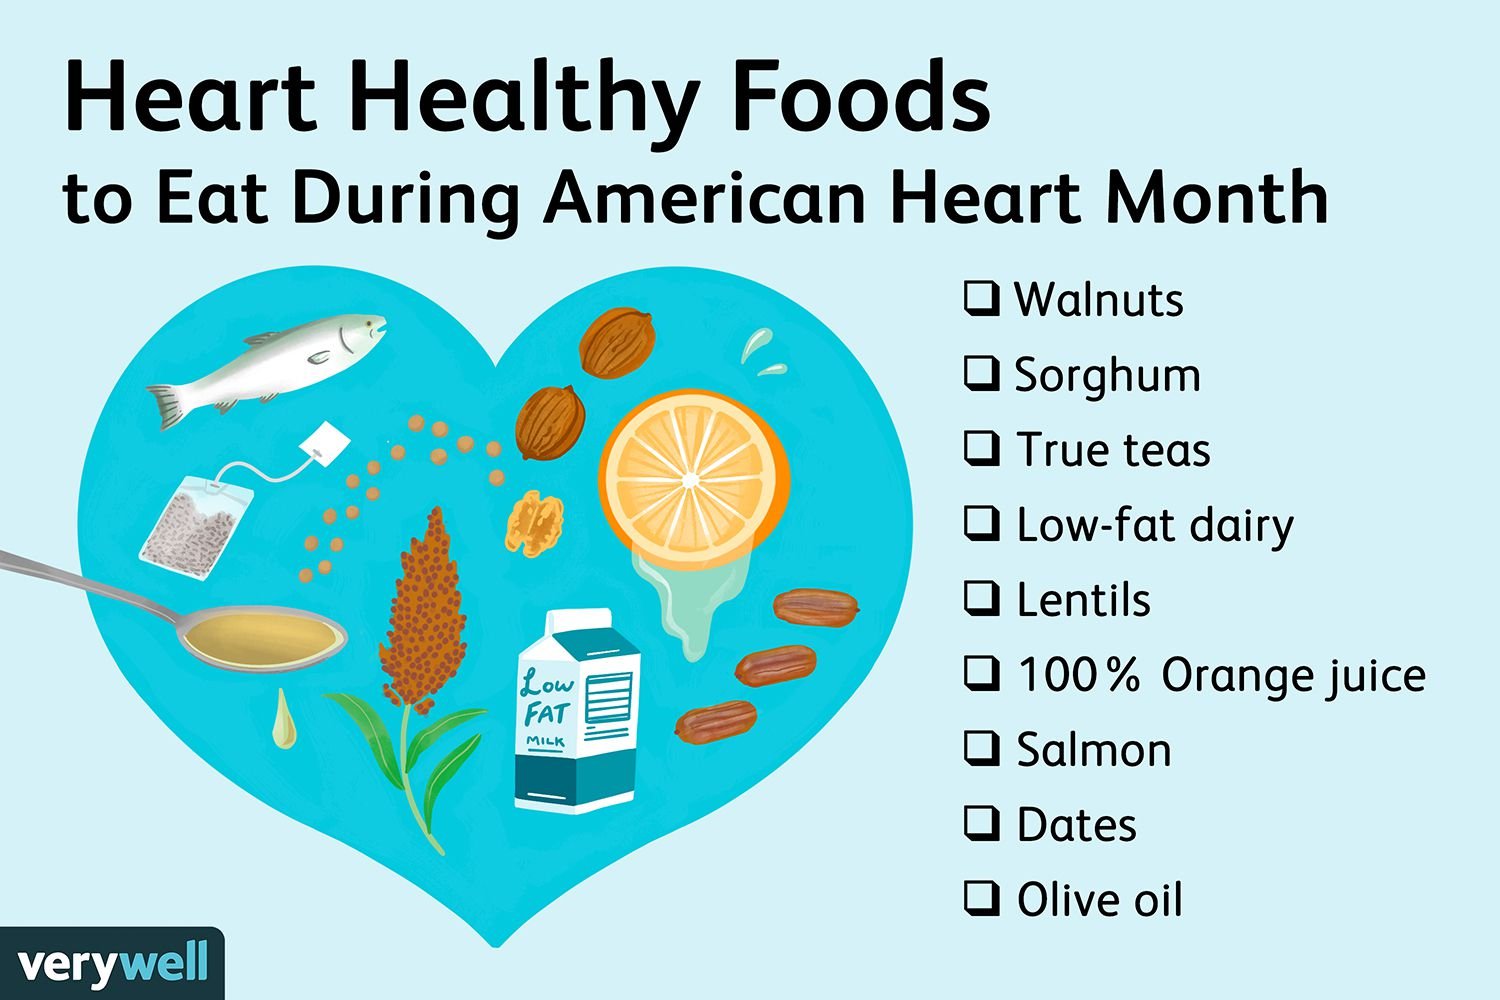 Heart-Healthy Foods to Prevent Heart Disease